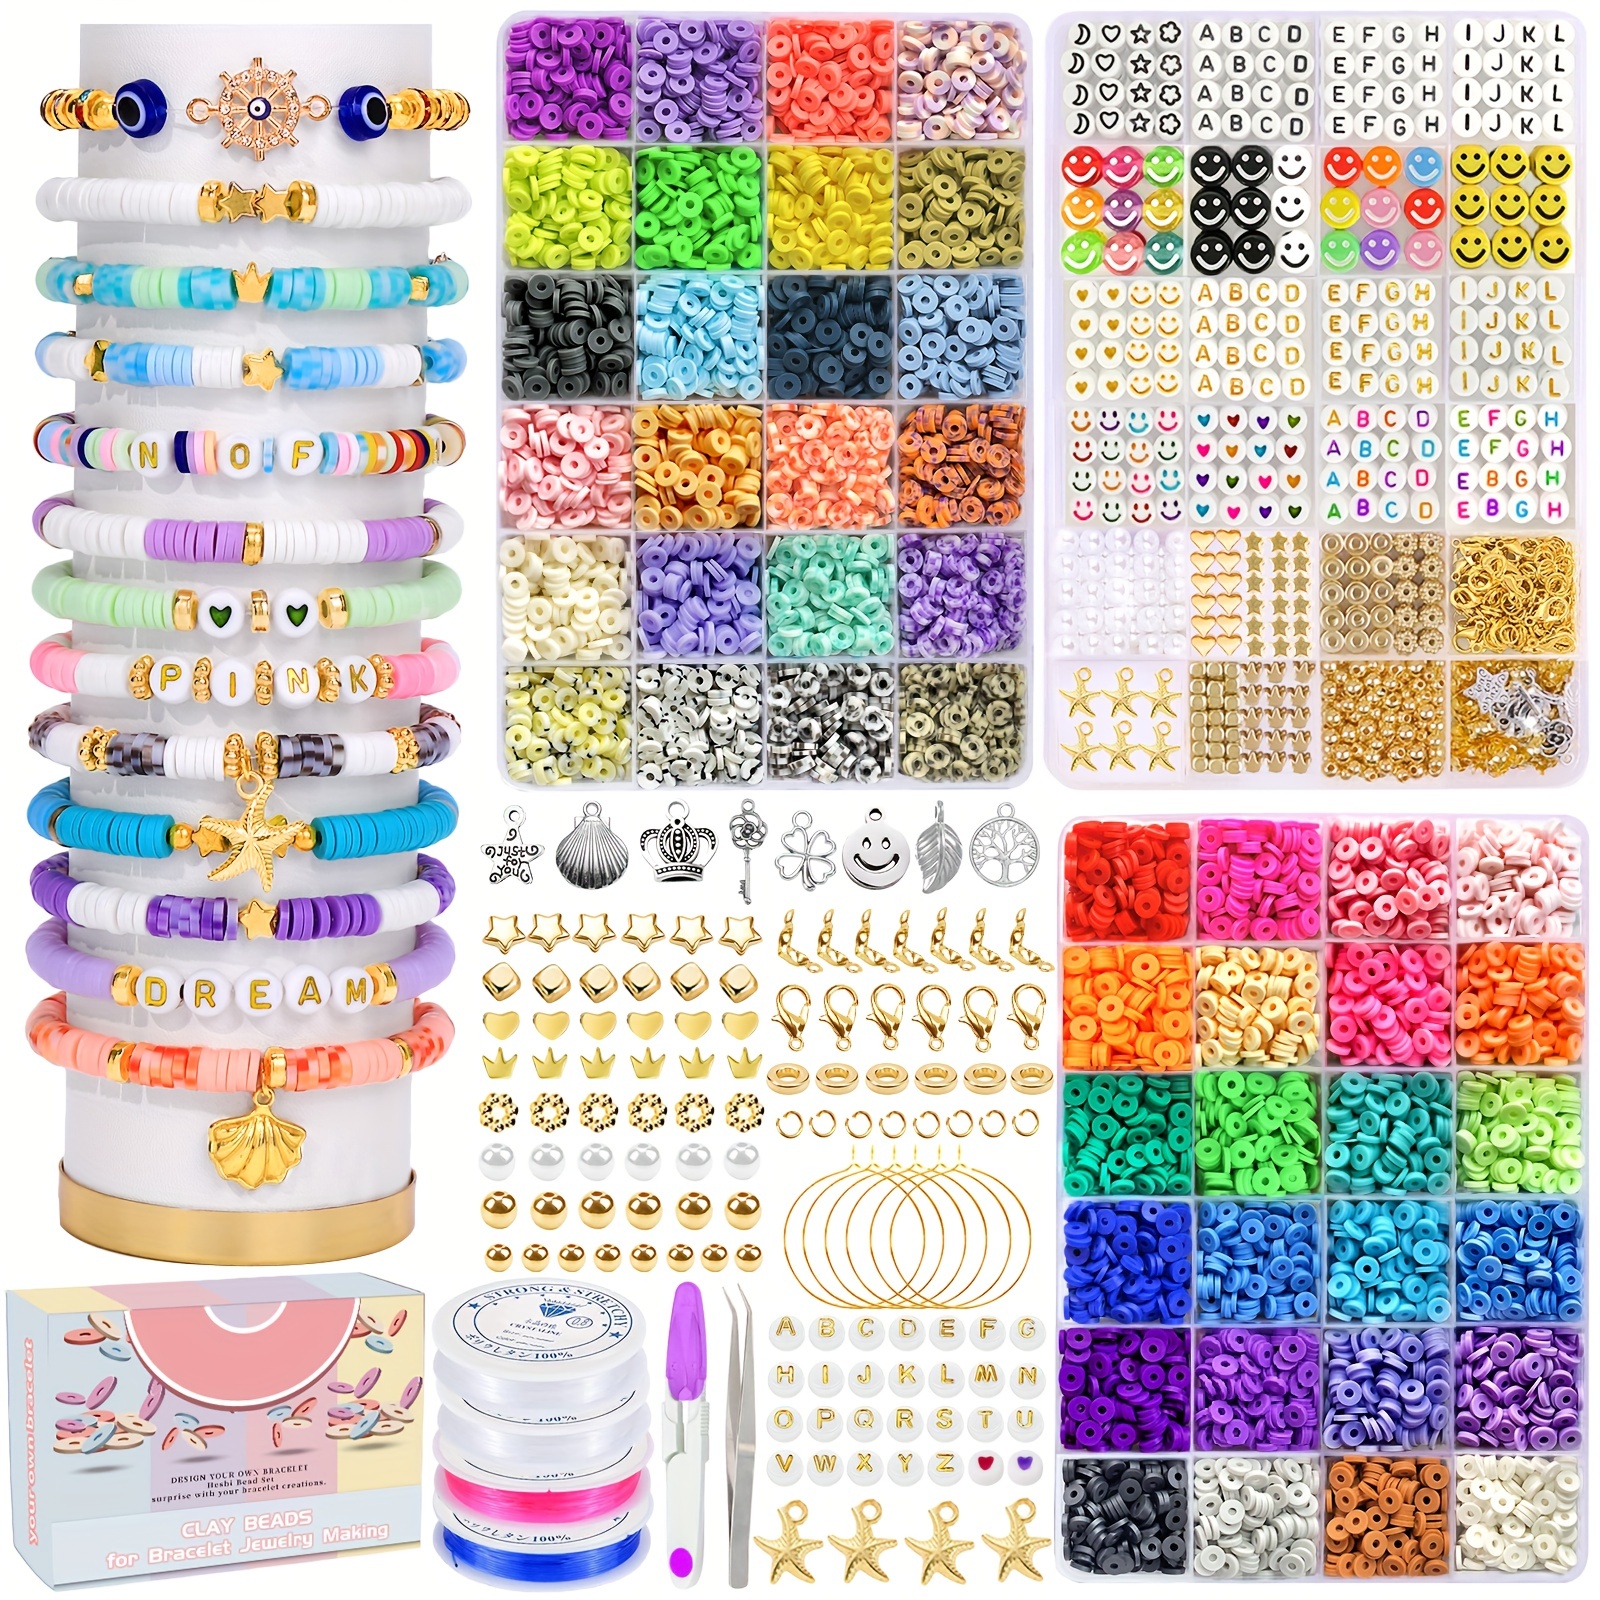 XIMISHOP 7200 Pcs Clay Beads Kit for Bracelet Making, 48 Color